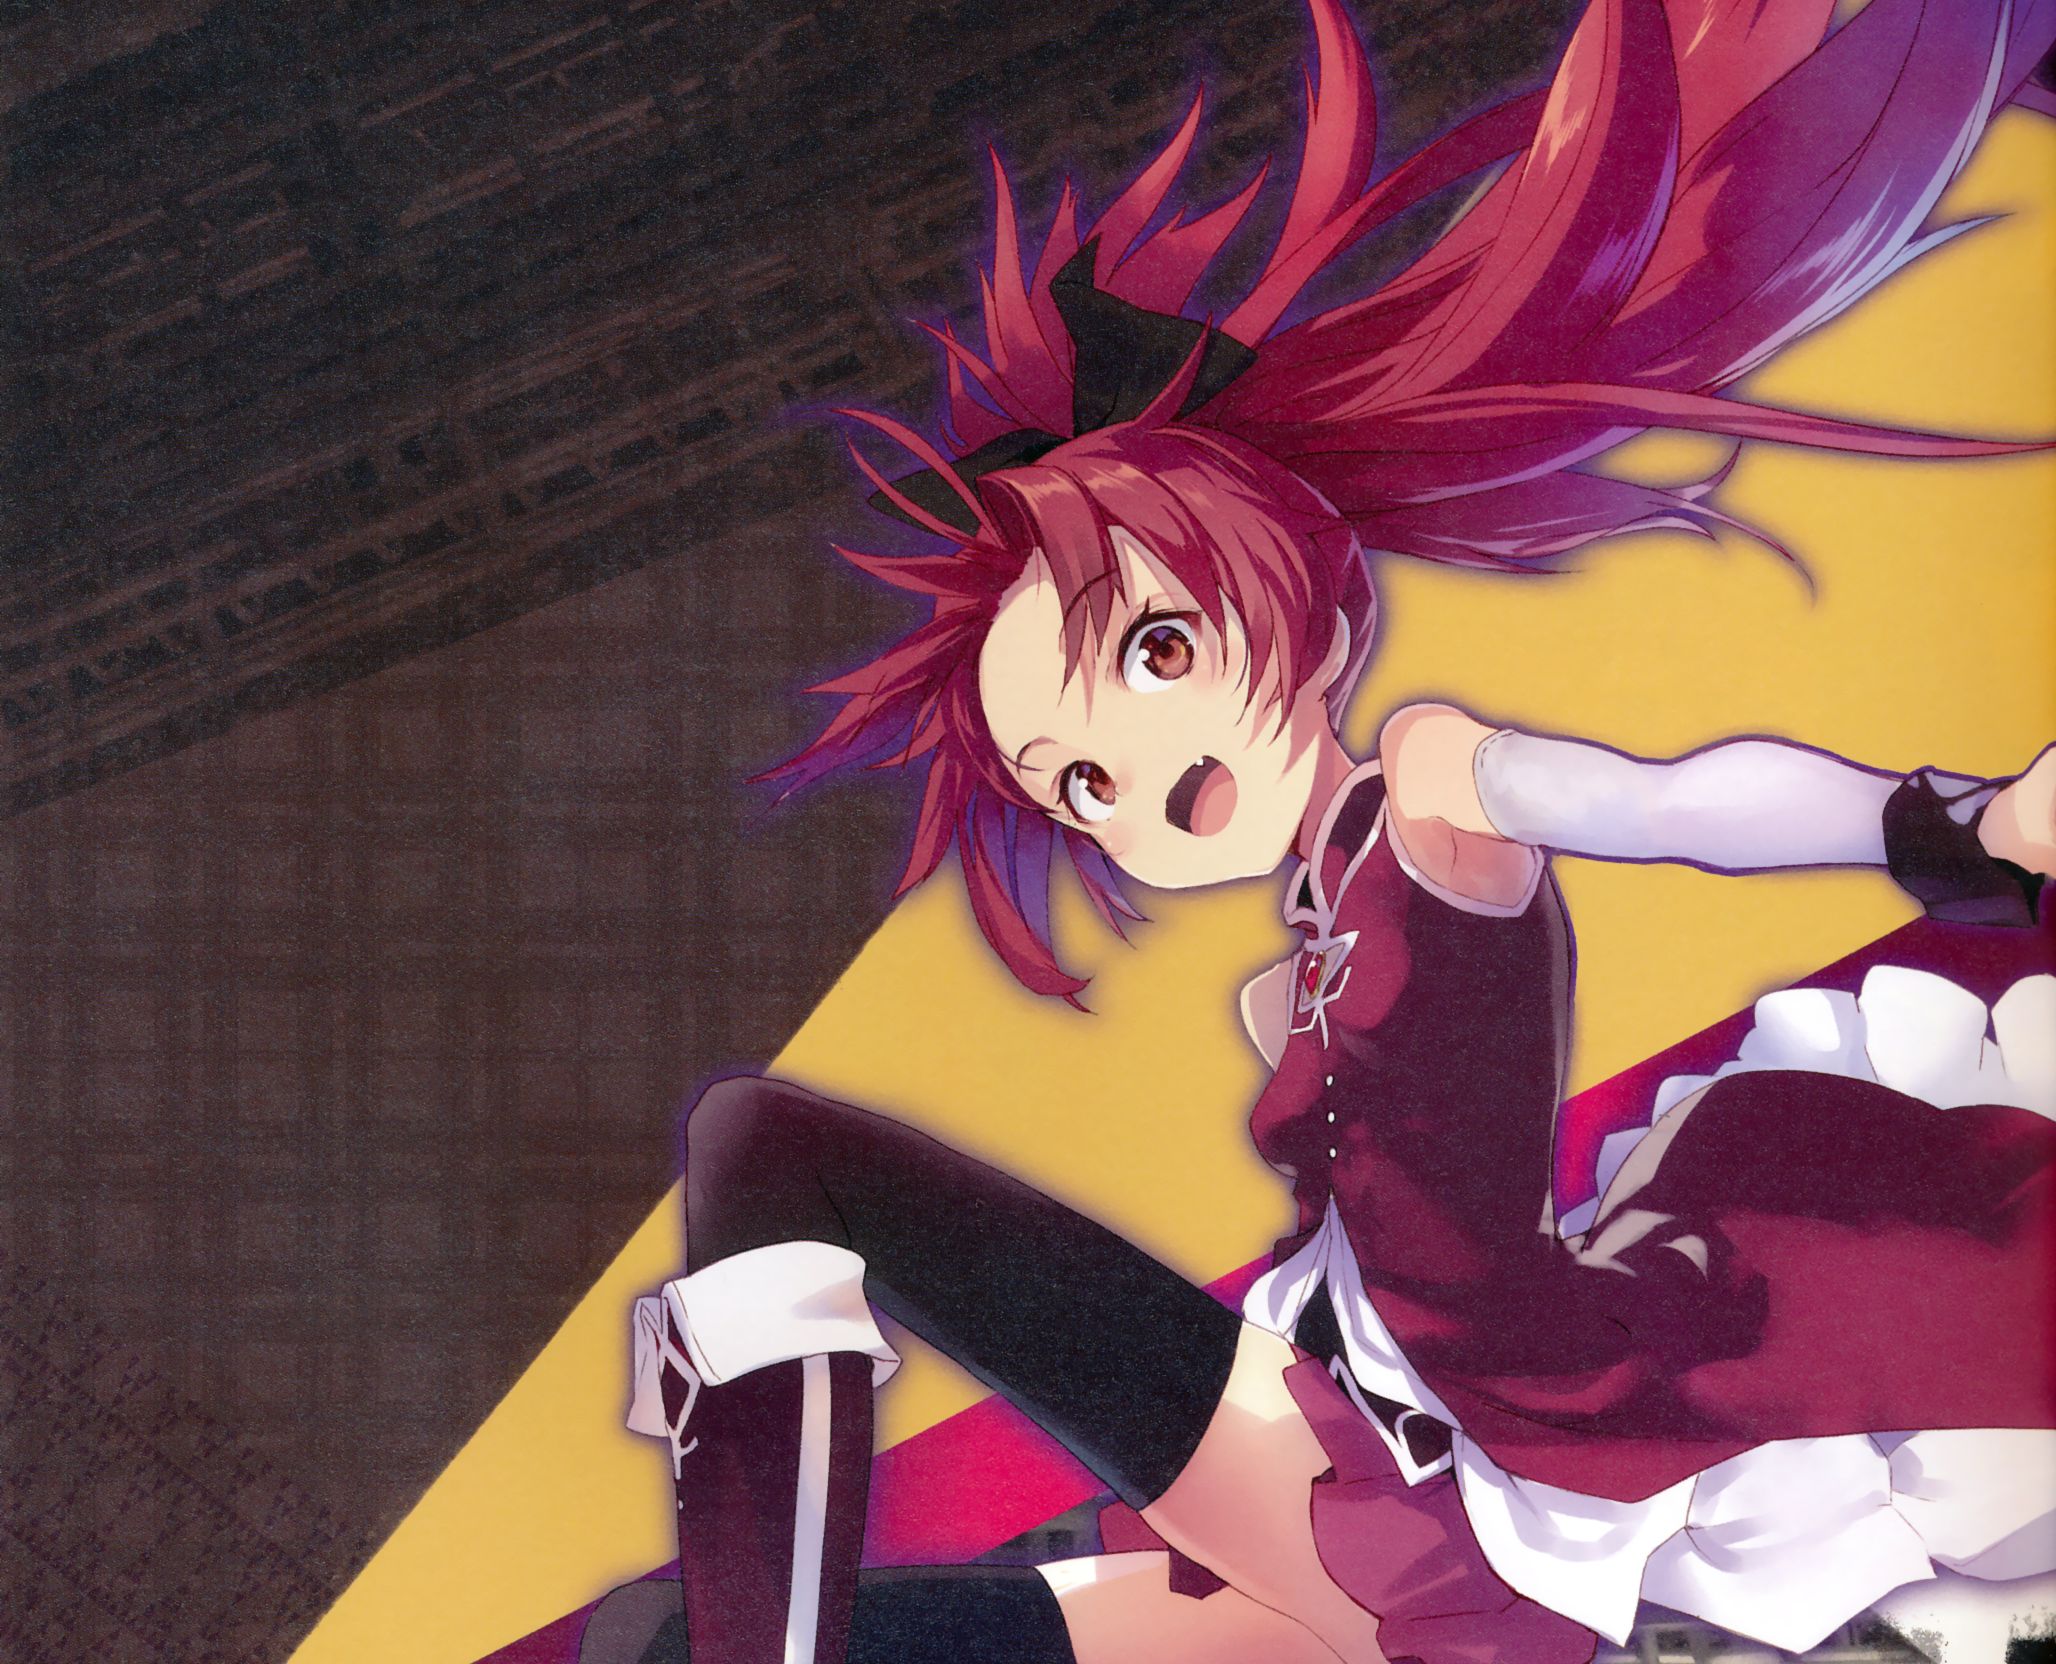 Descarga gratuita de fondo de pantalla para móvil de Animado, Kyōko Sakura, Puella Magi Madoka Magica.